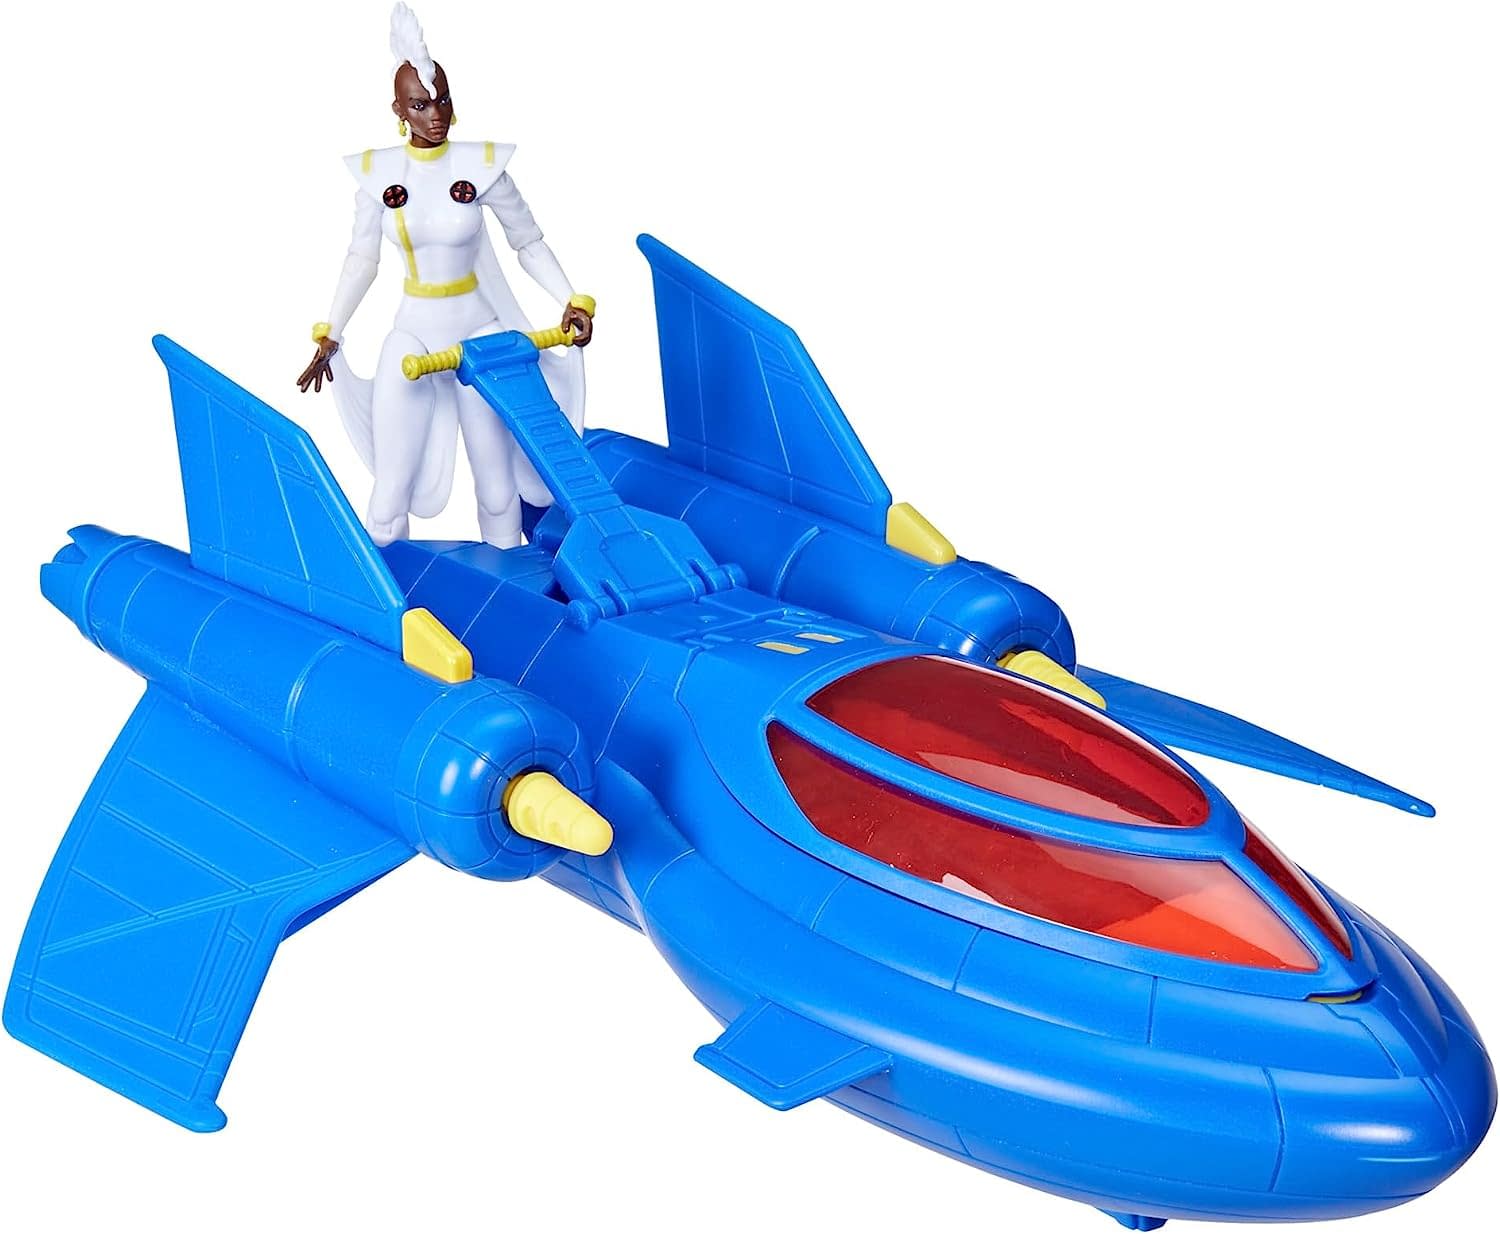 The XJet Takes Flight with Hasbro’s New XMen 97’ Epic Hero Series